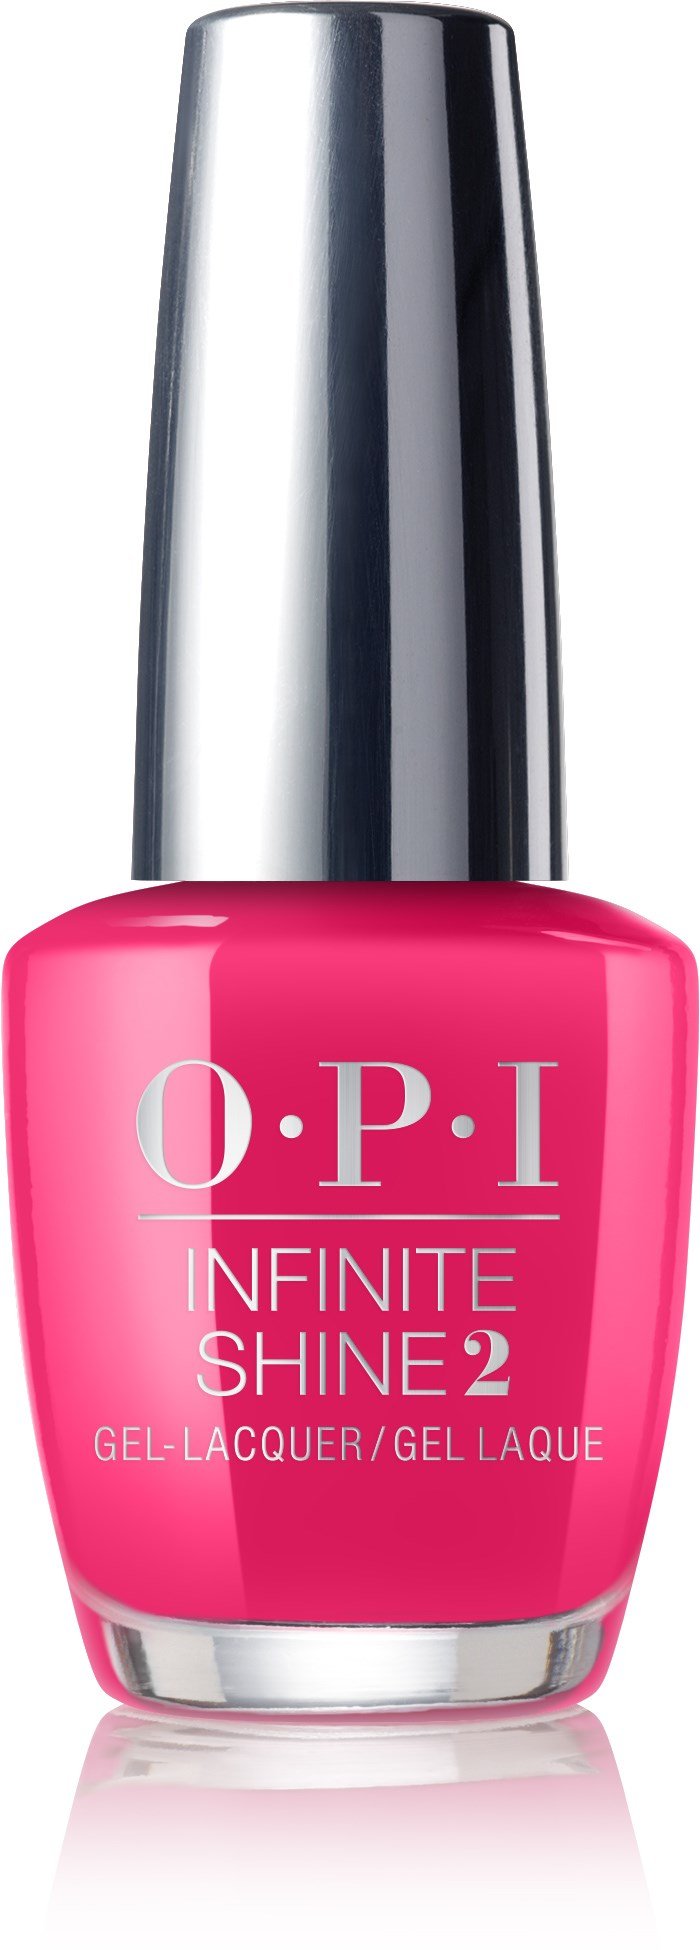 OPI Infinite Shine - Margarita de fresa